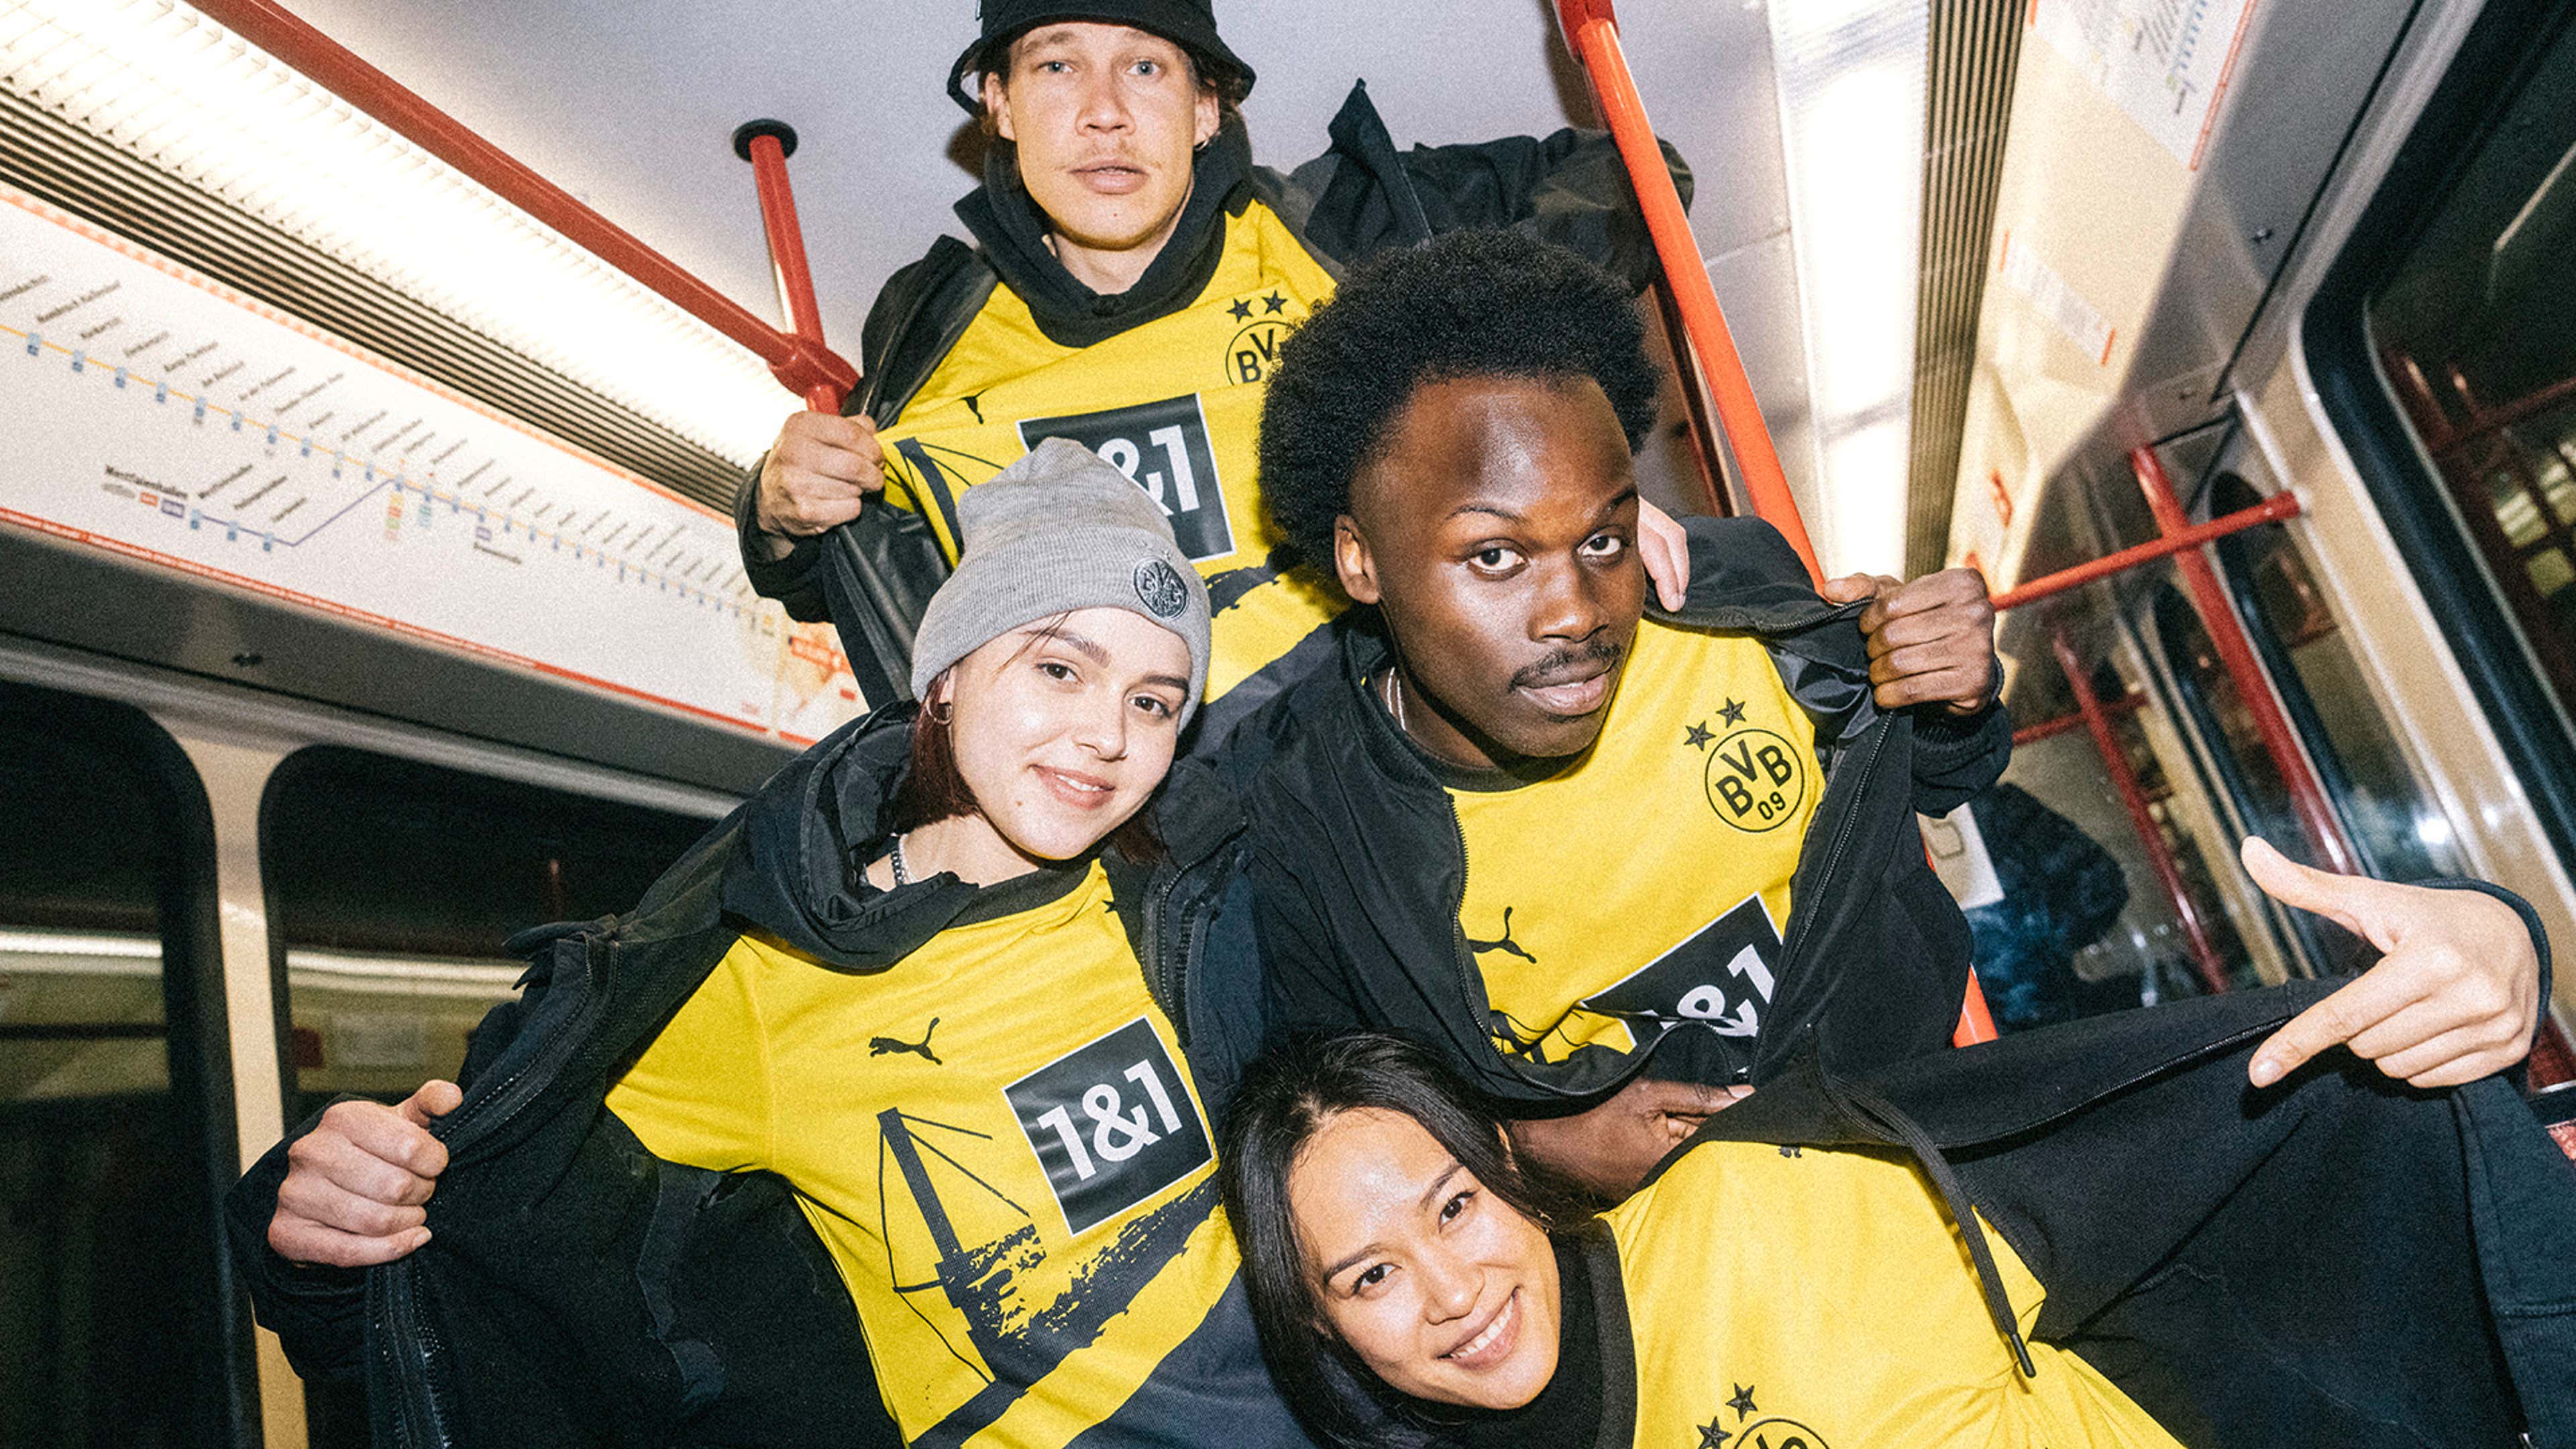 GOAL on X: Borussia Dortmund's new Puma home kit featuring the